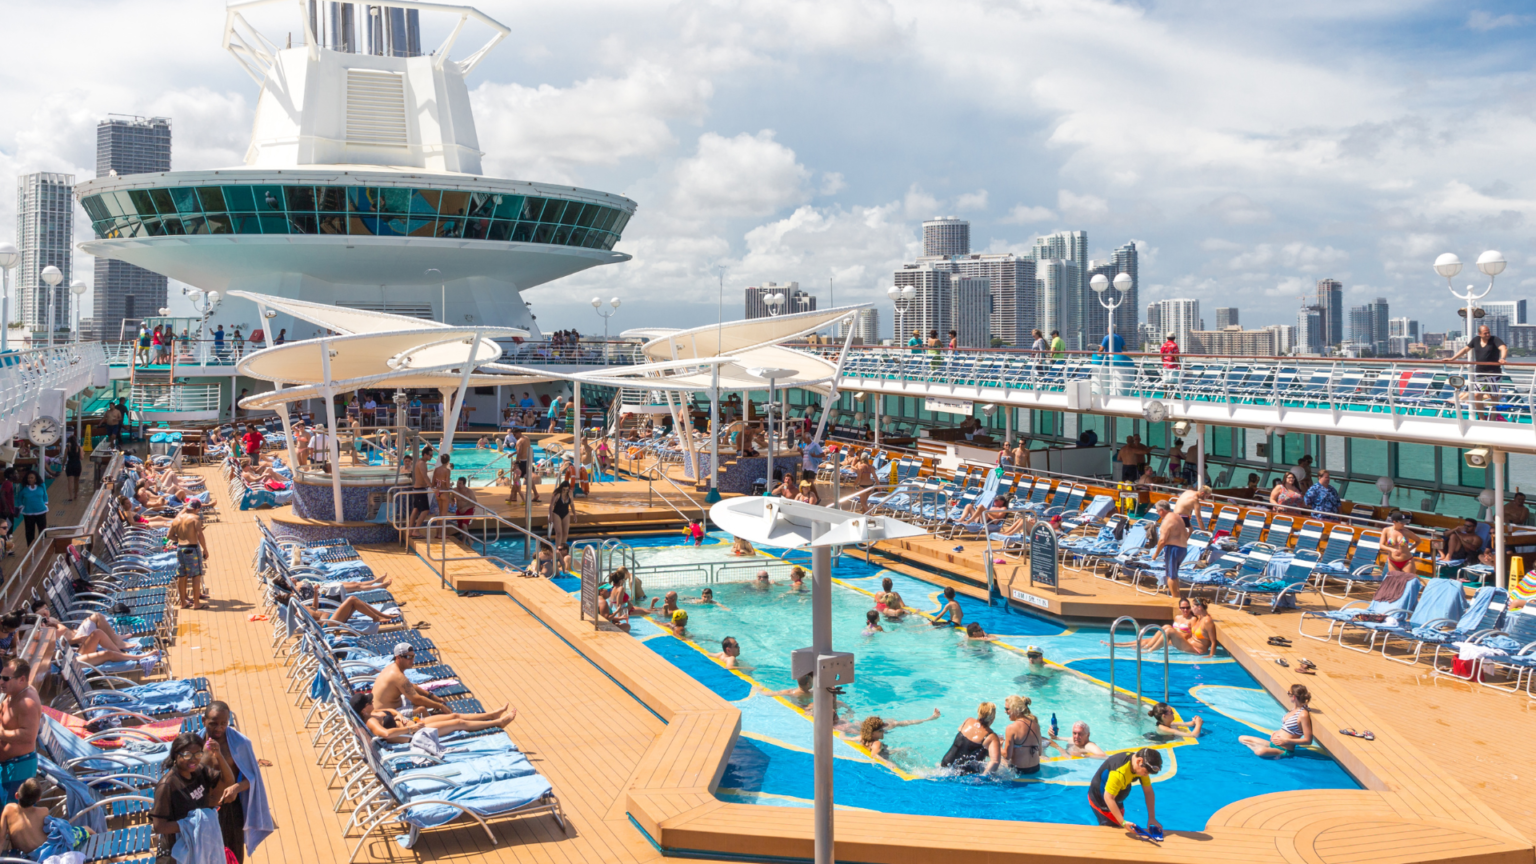 Wide angle shot of a big crowd enjoying a pool on a Royal Caribbean cruise ship